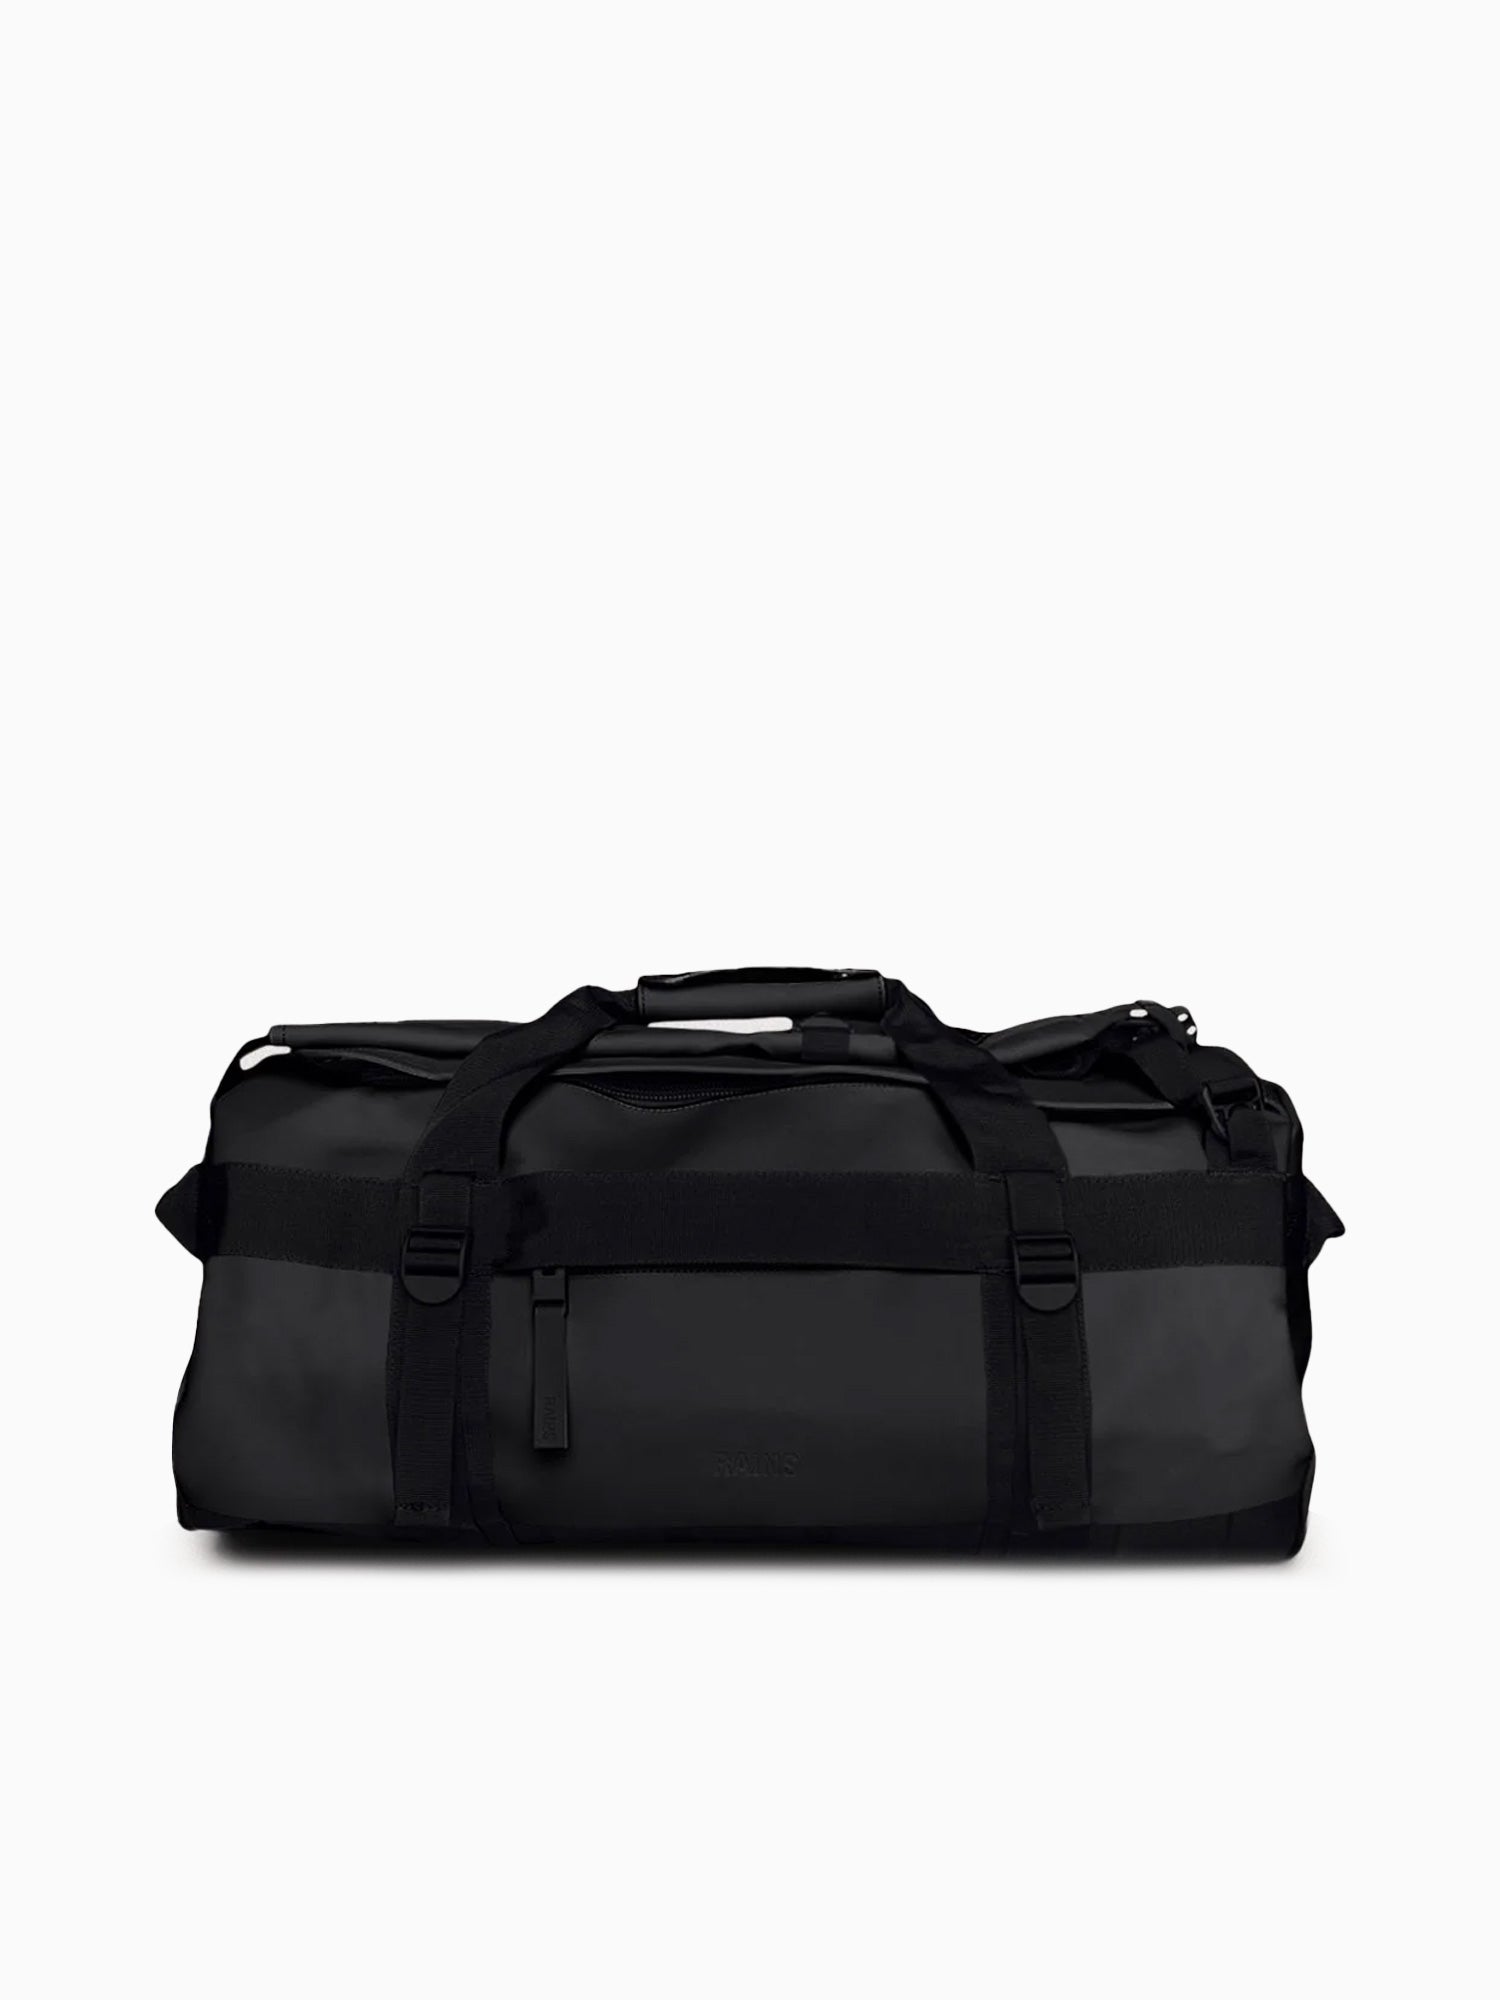 Texel Duffel Bag Small W3, 01 Black